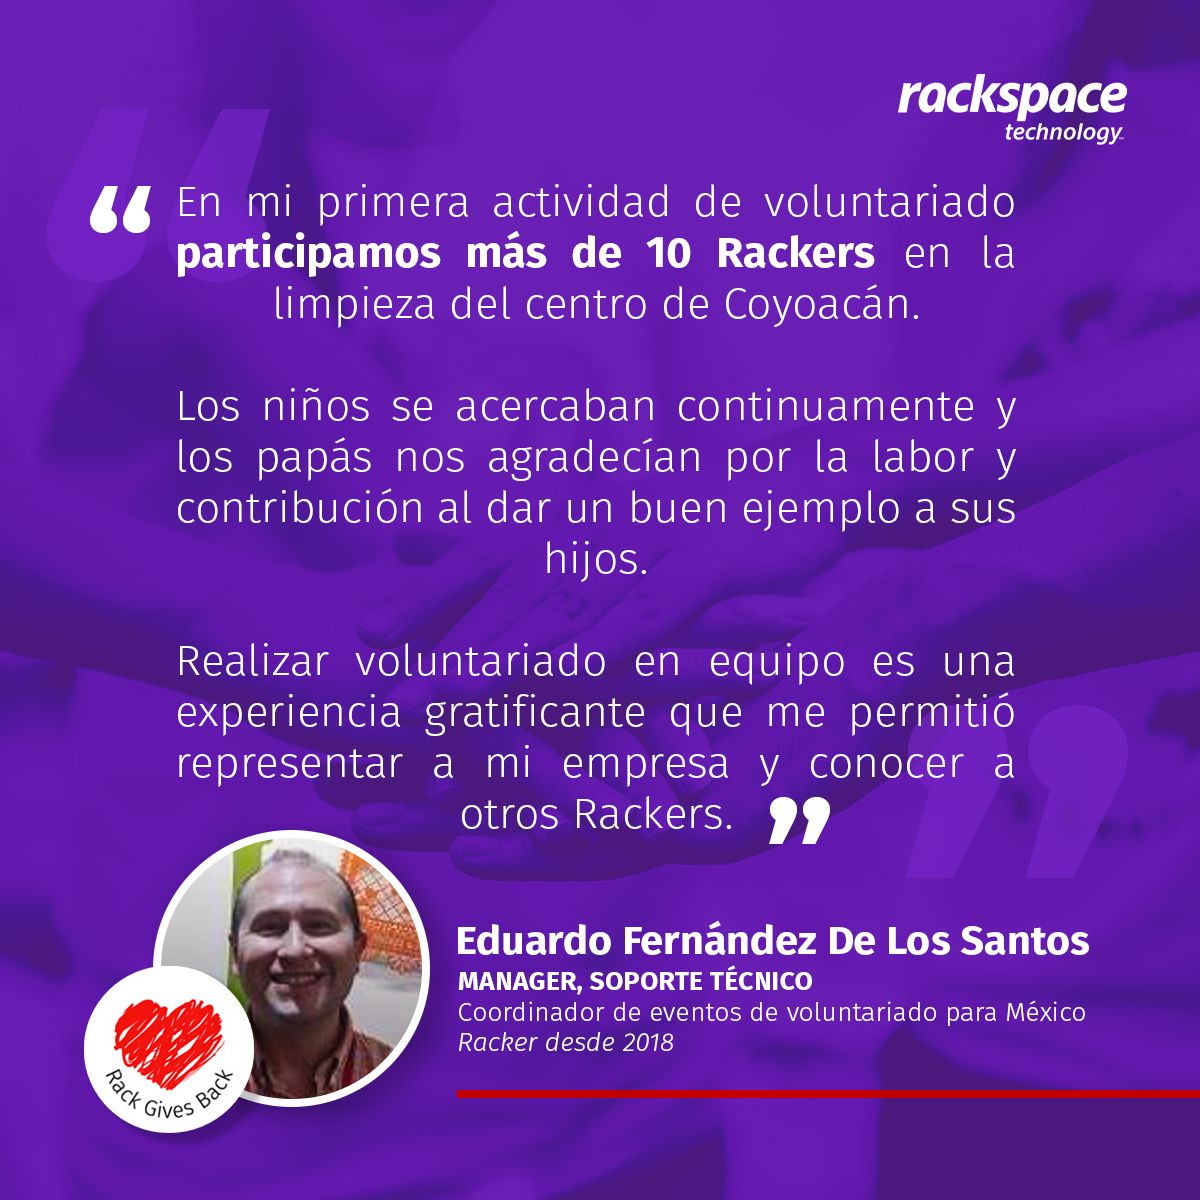 Rackspace Technology on LinkedIn: #RackGivesBack #Voluntariado #RackerLife